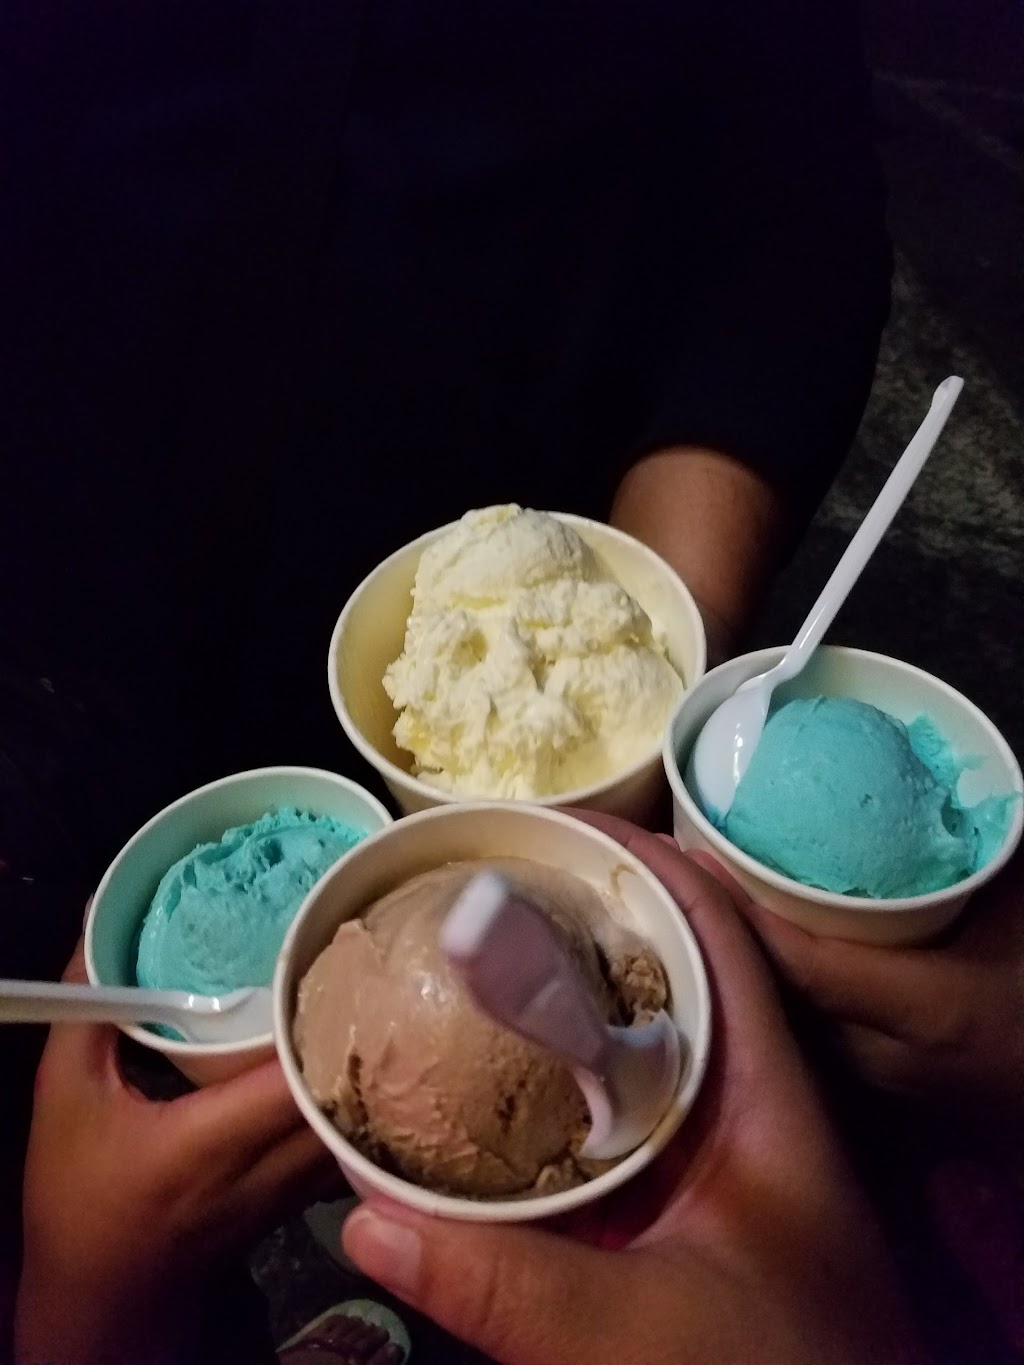 Guanatos Ice Cream | 2474 Willow Pass Rd, Bay Point, CA 94565 | Phone: (925) 458-5500